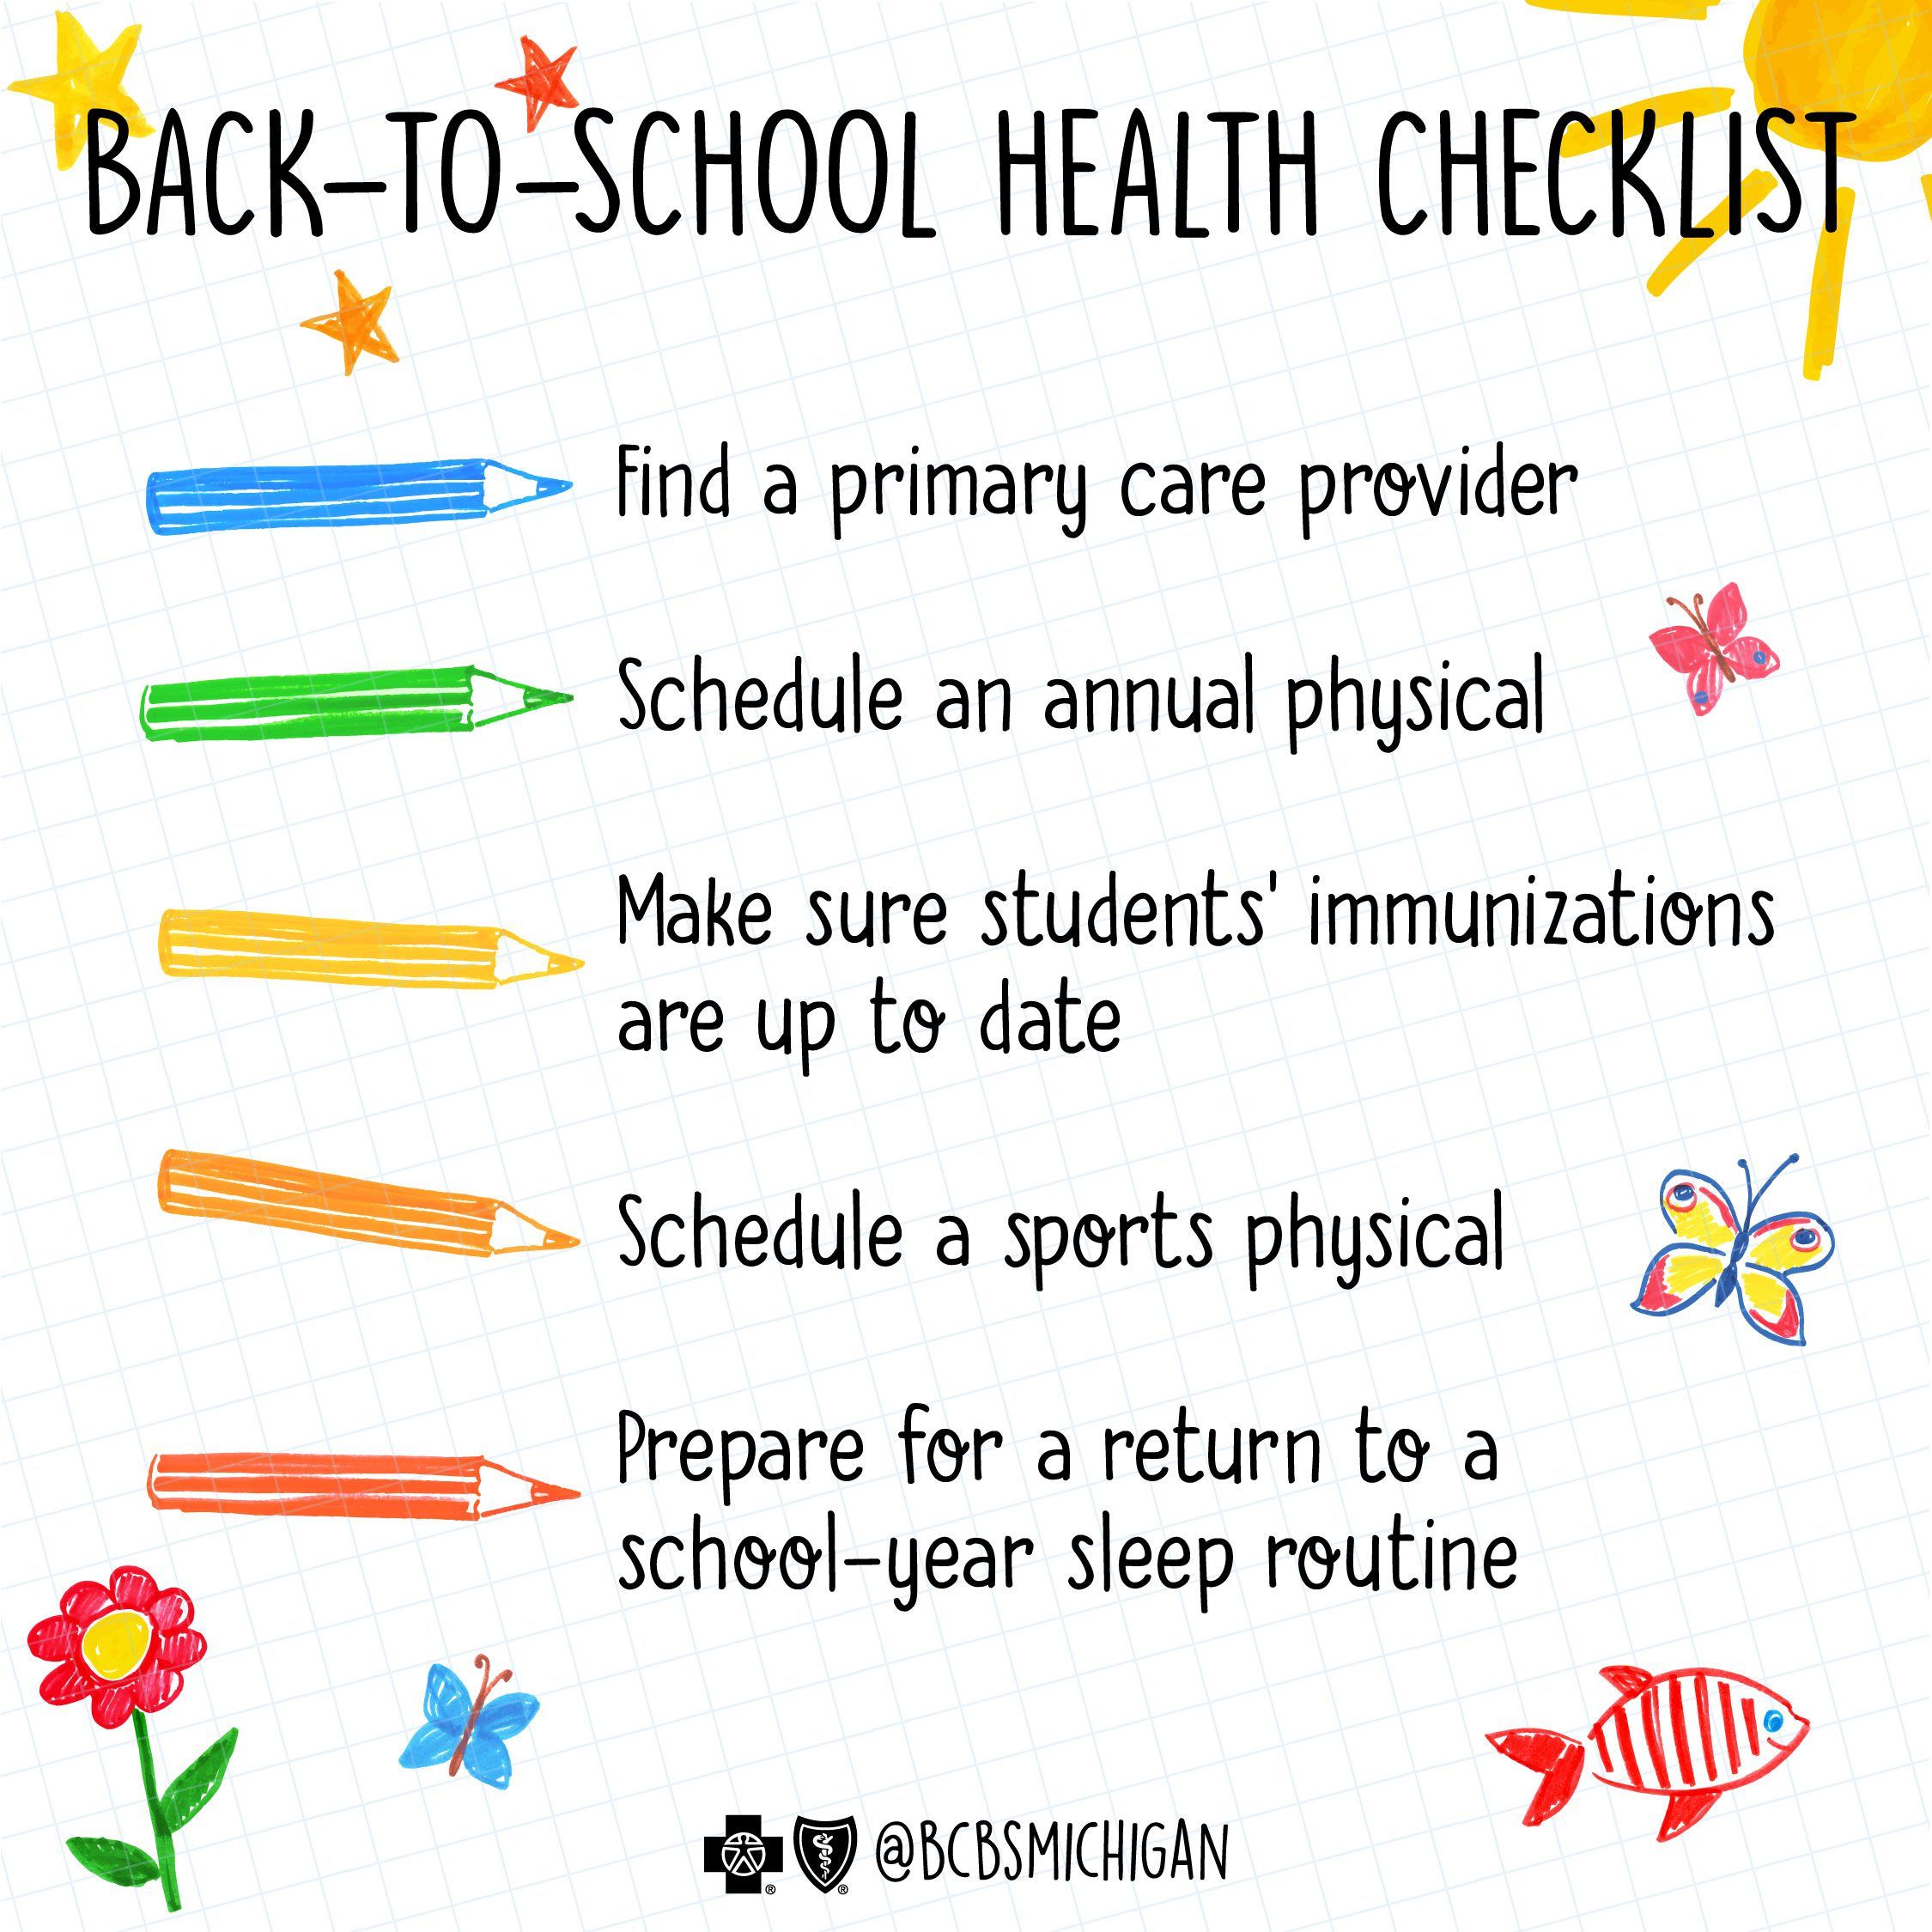 Back-to-school health checklist